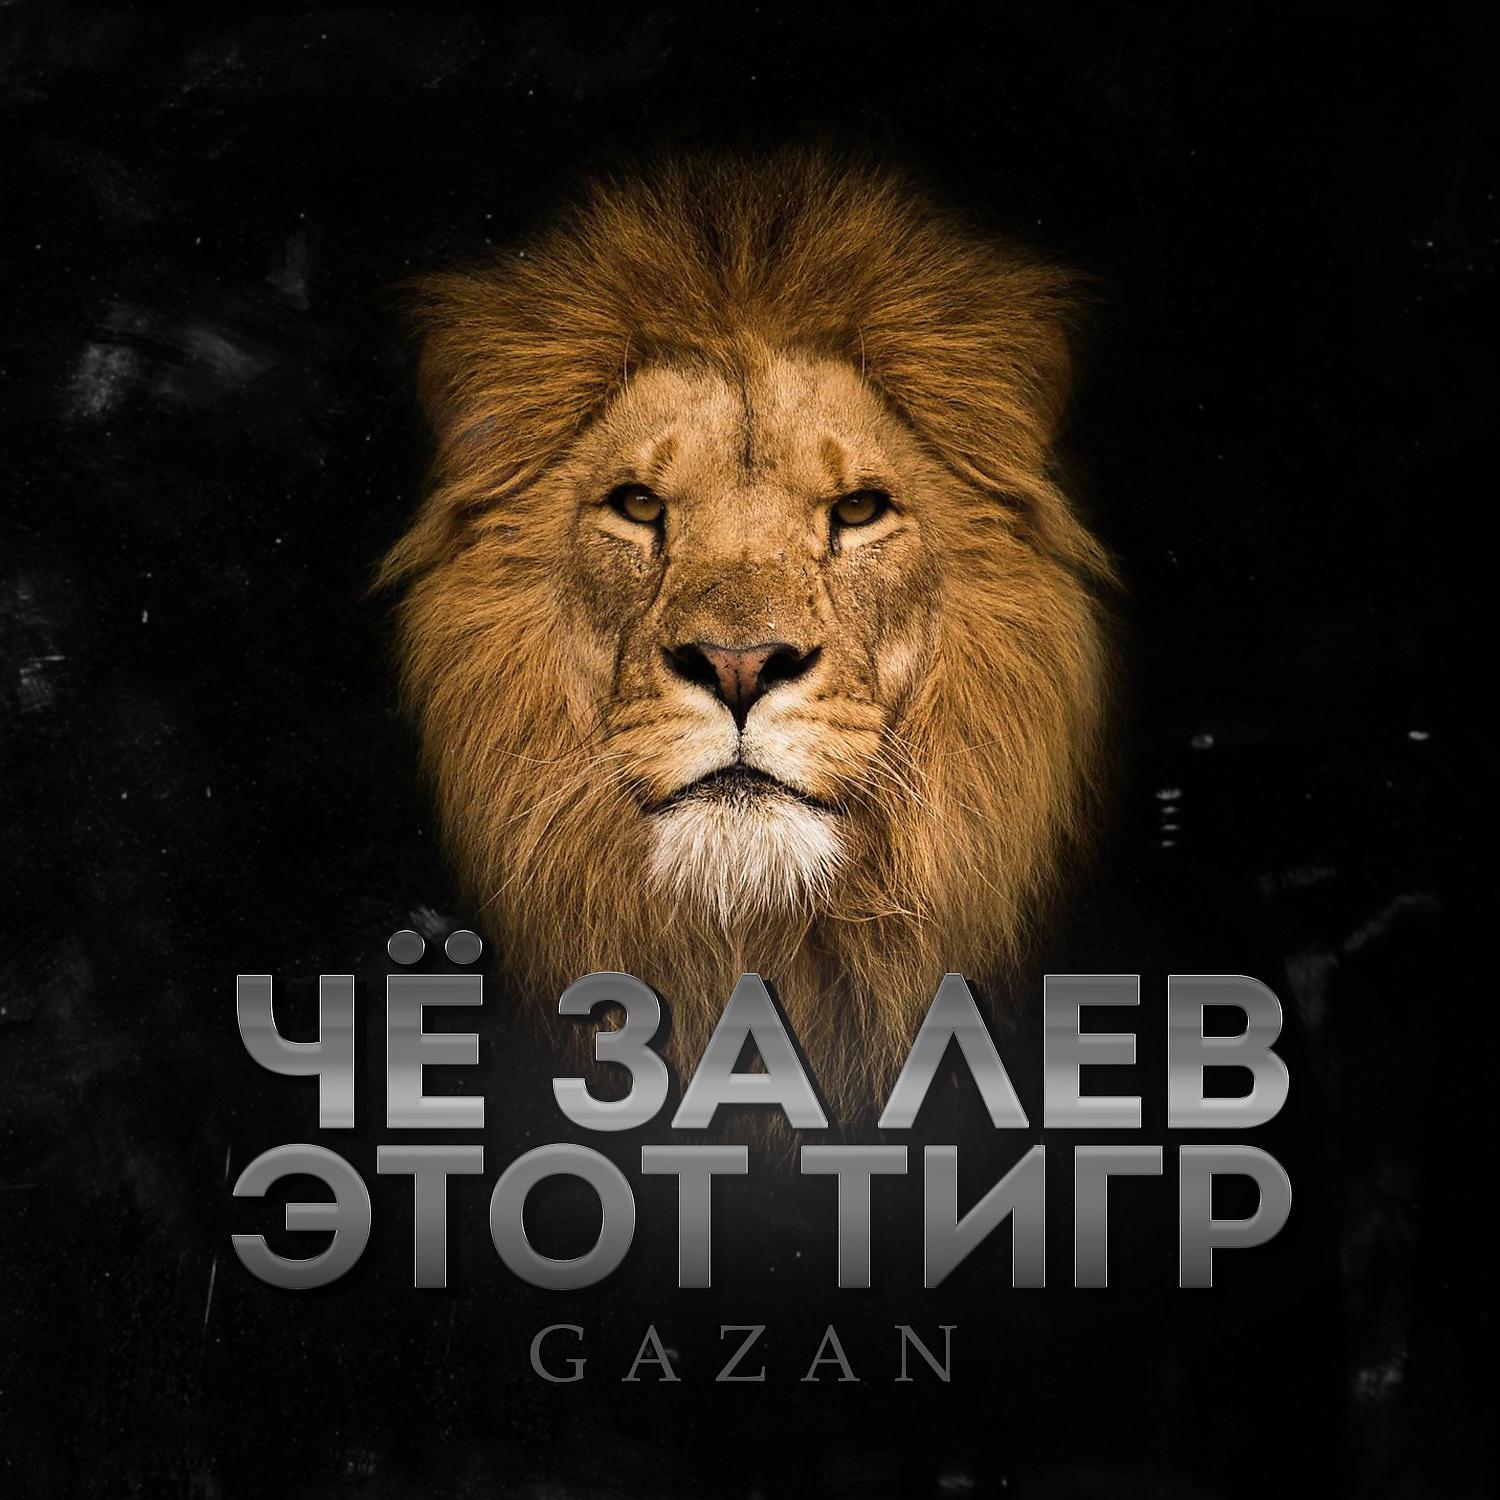 Gazan с днем рождения mp3. Че за Лев этот тигр. Газан че за Лев этот тигр. Gazan тигр.